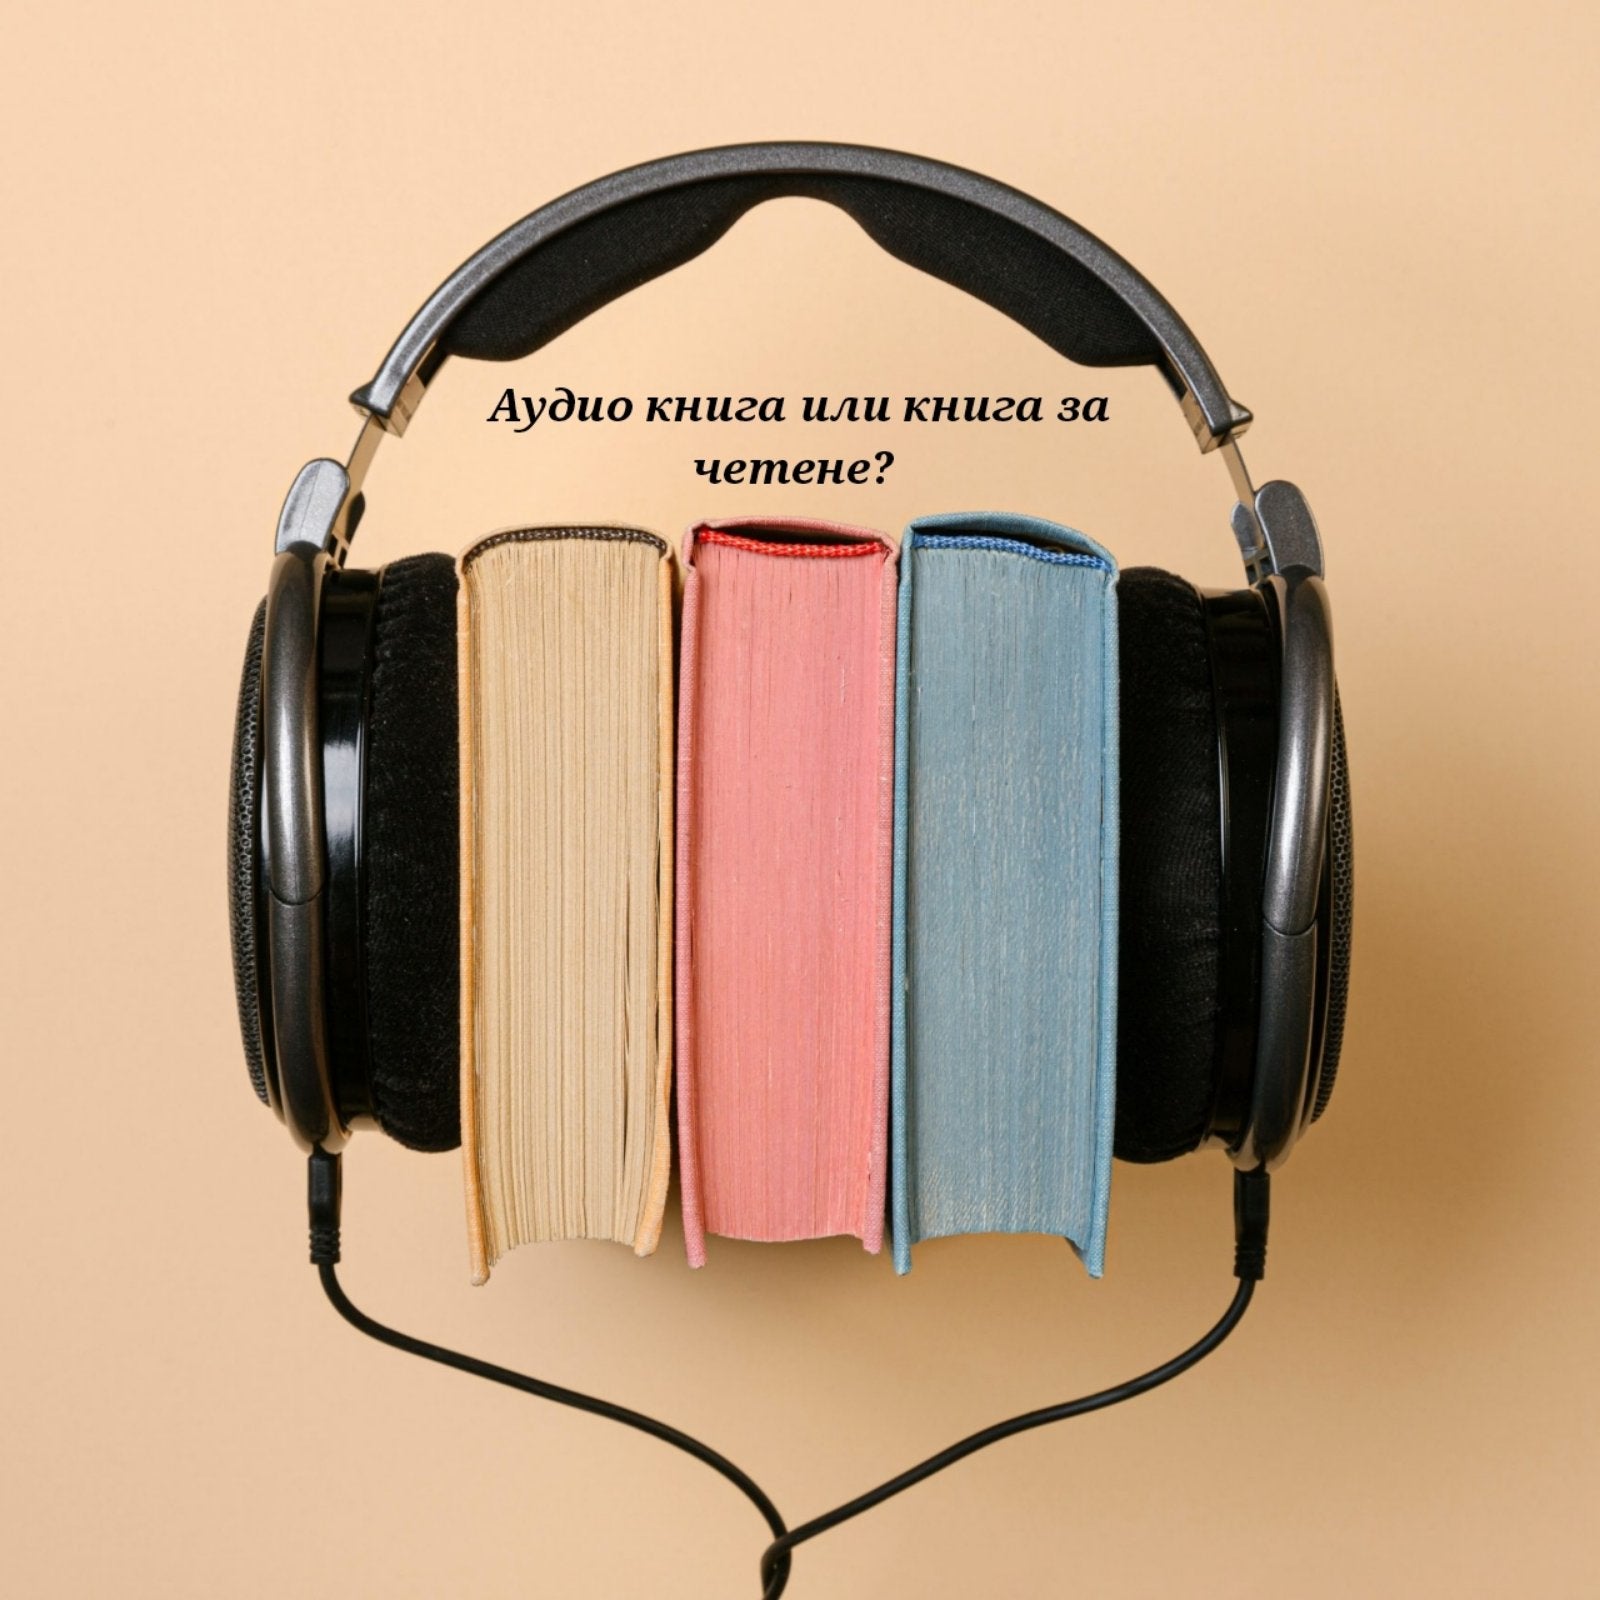 Аудио книга или книга за четене?